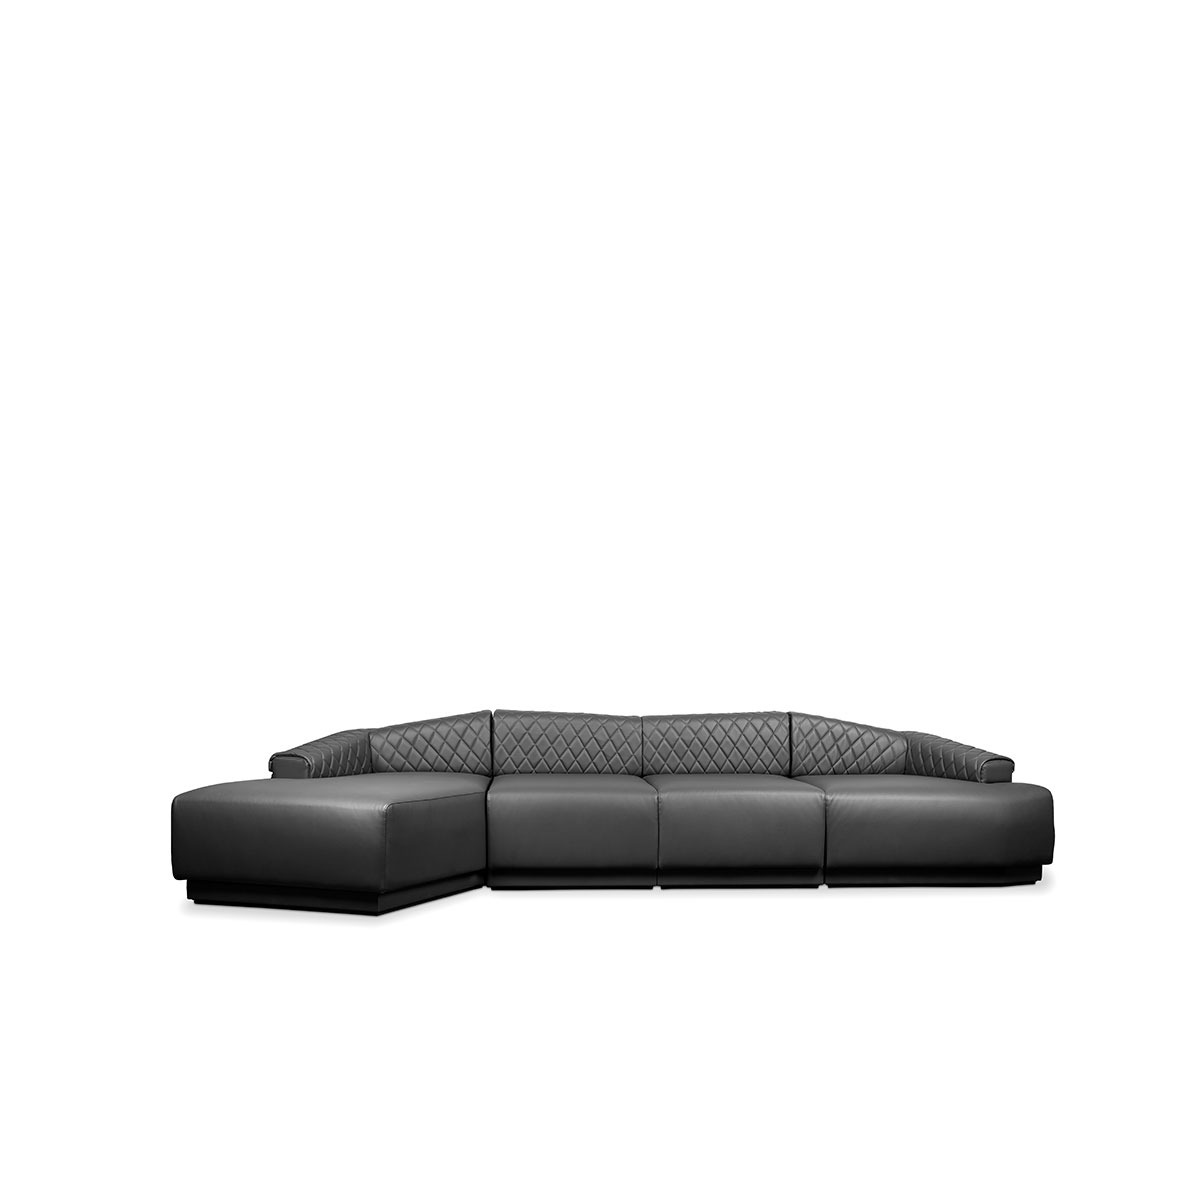 Luxxu anguis sofa general img 1200x1200 Odette Sofa